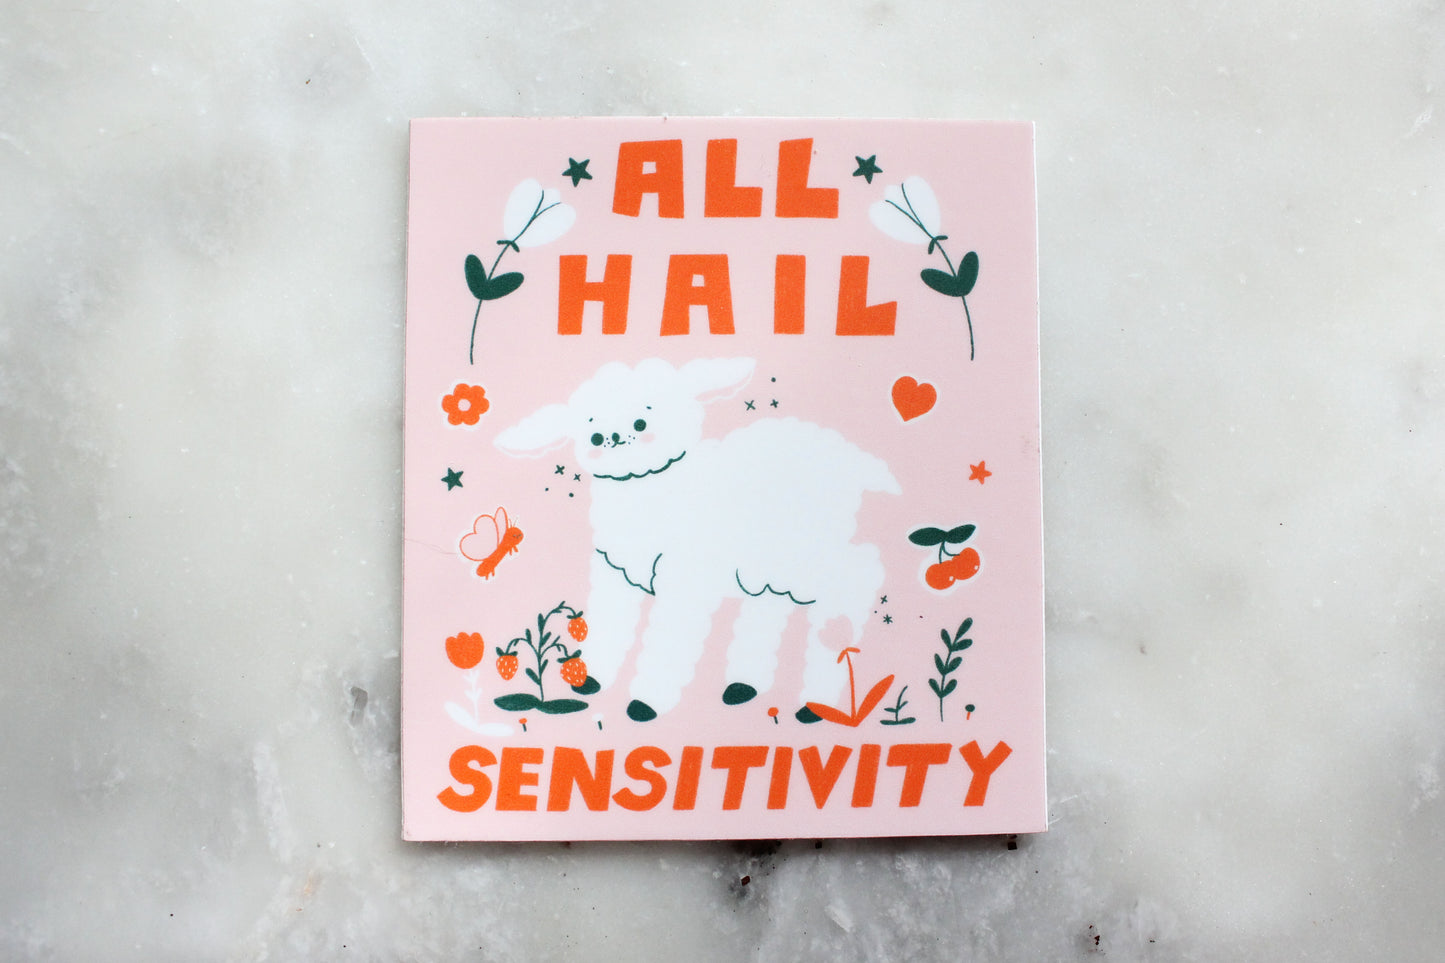 All Hail Sensitivity Sticker